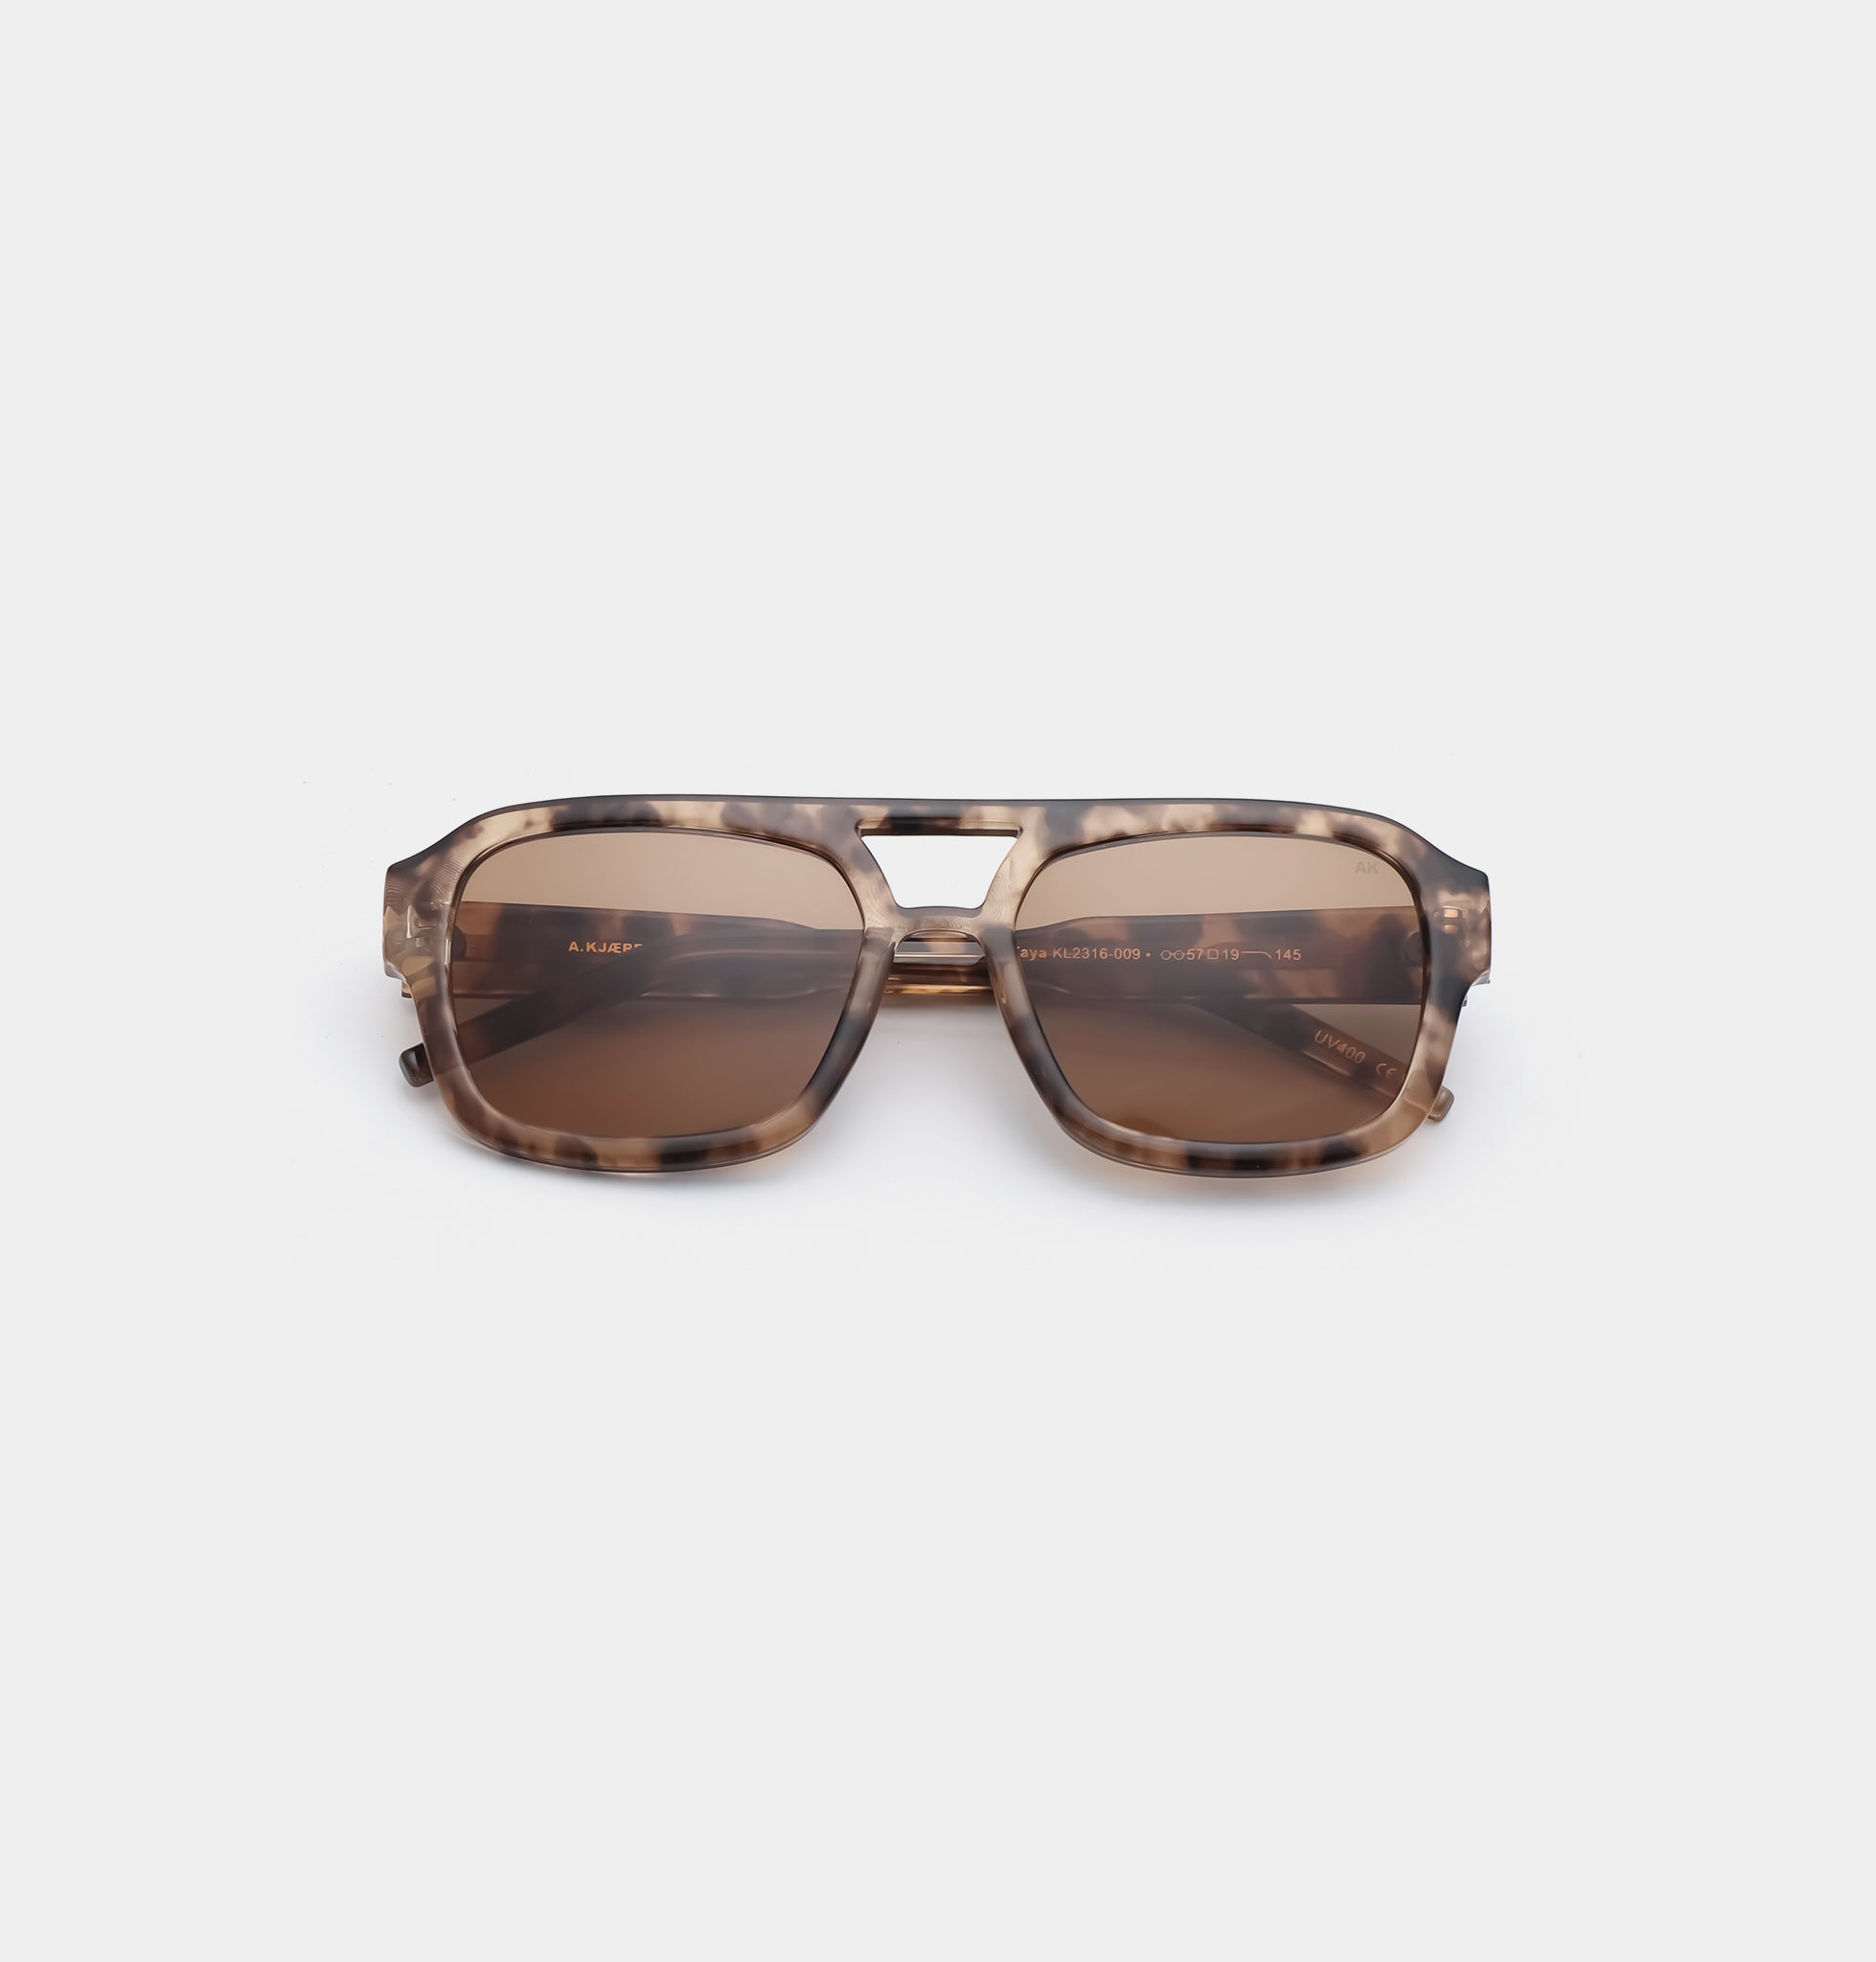 Kaya sunglasses in coquina